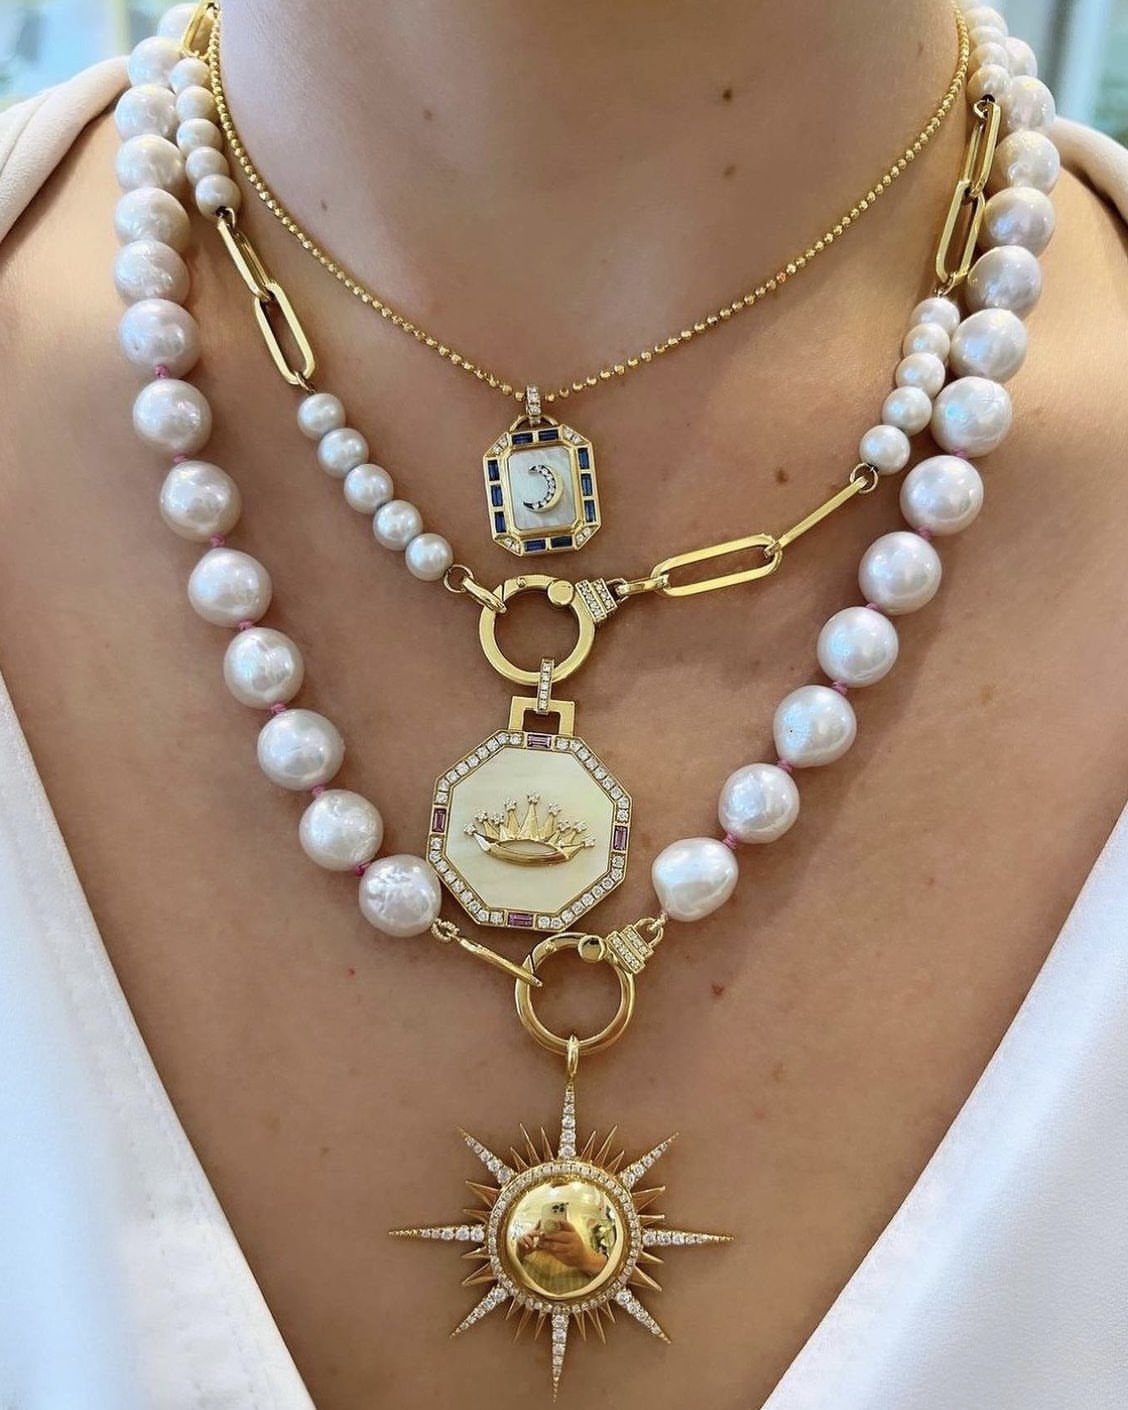 One of a kind pieces from @sorellinajewelry.

 #goldjewelry #privaterareregal #instajewelry